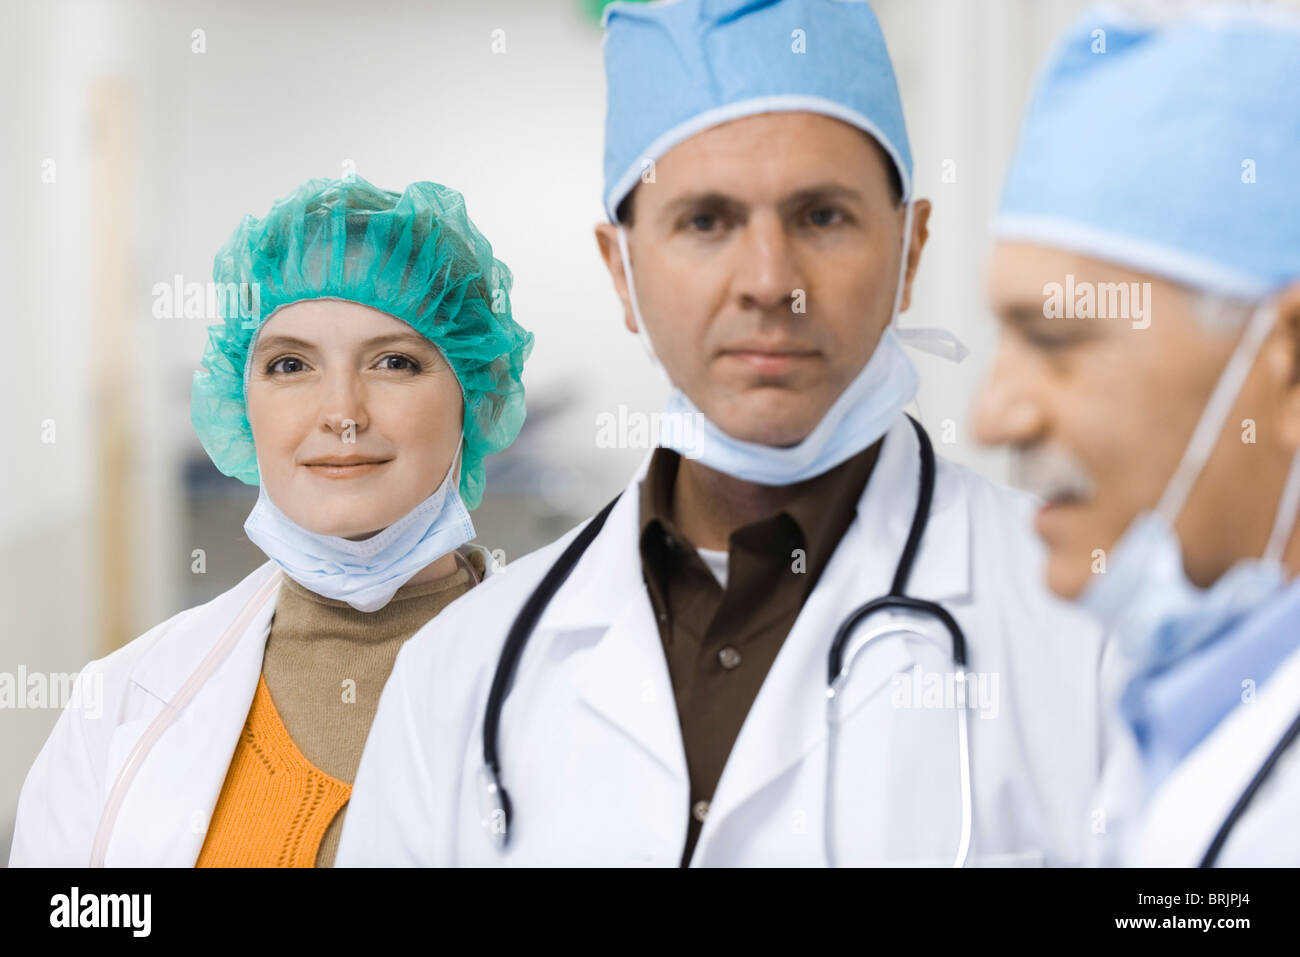 Healthcare workers, portrait Stock Photo